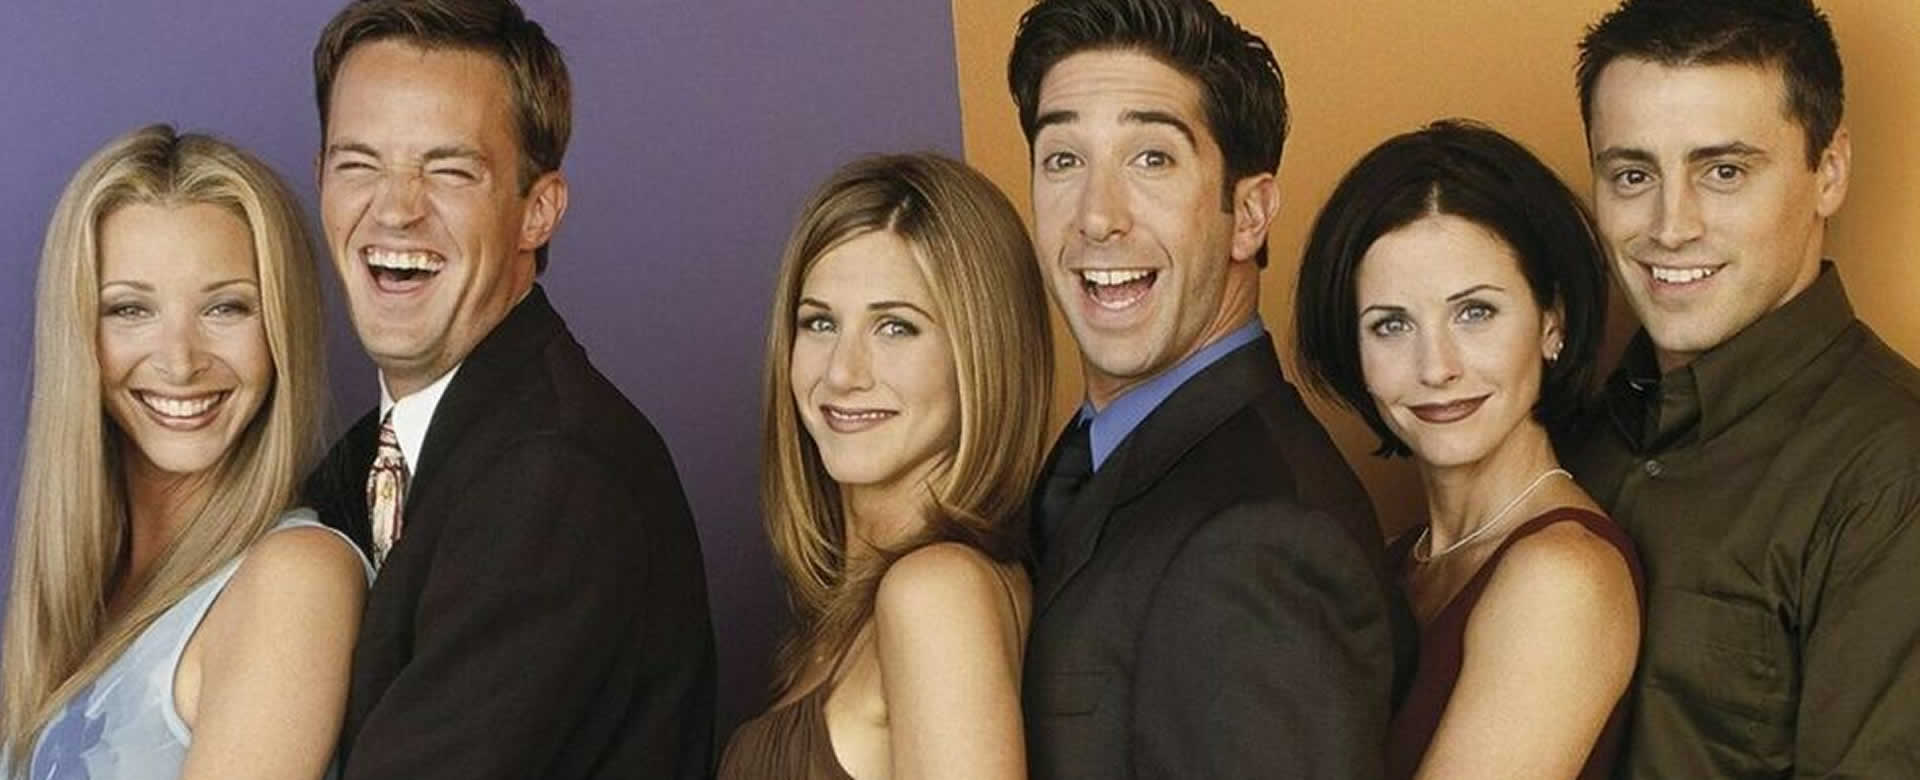 Netflix paga una millonada para mantener la serie Friends